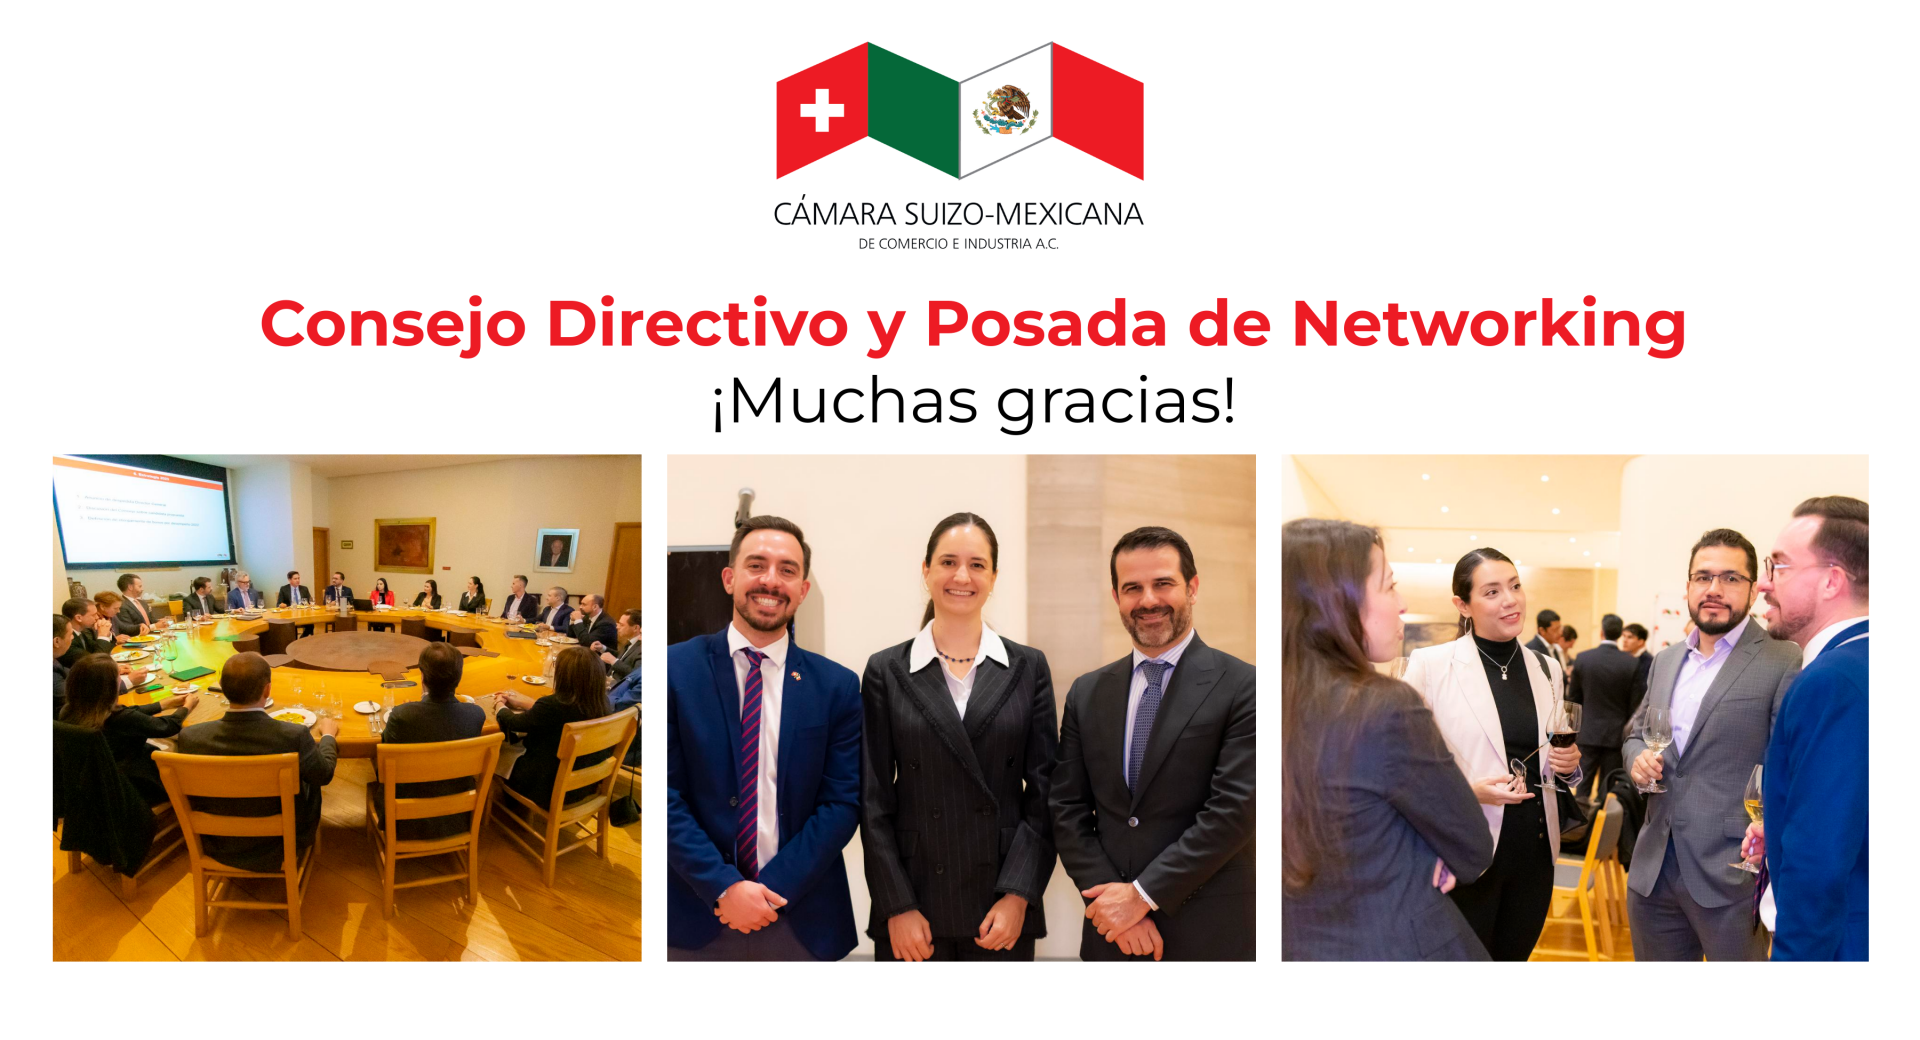 Board of Directors and Networking Posada